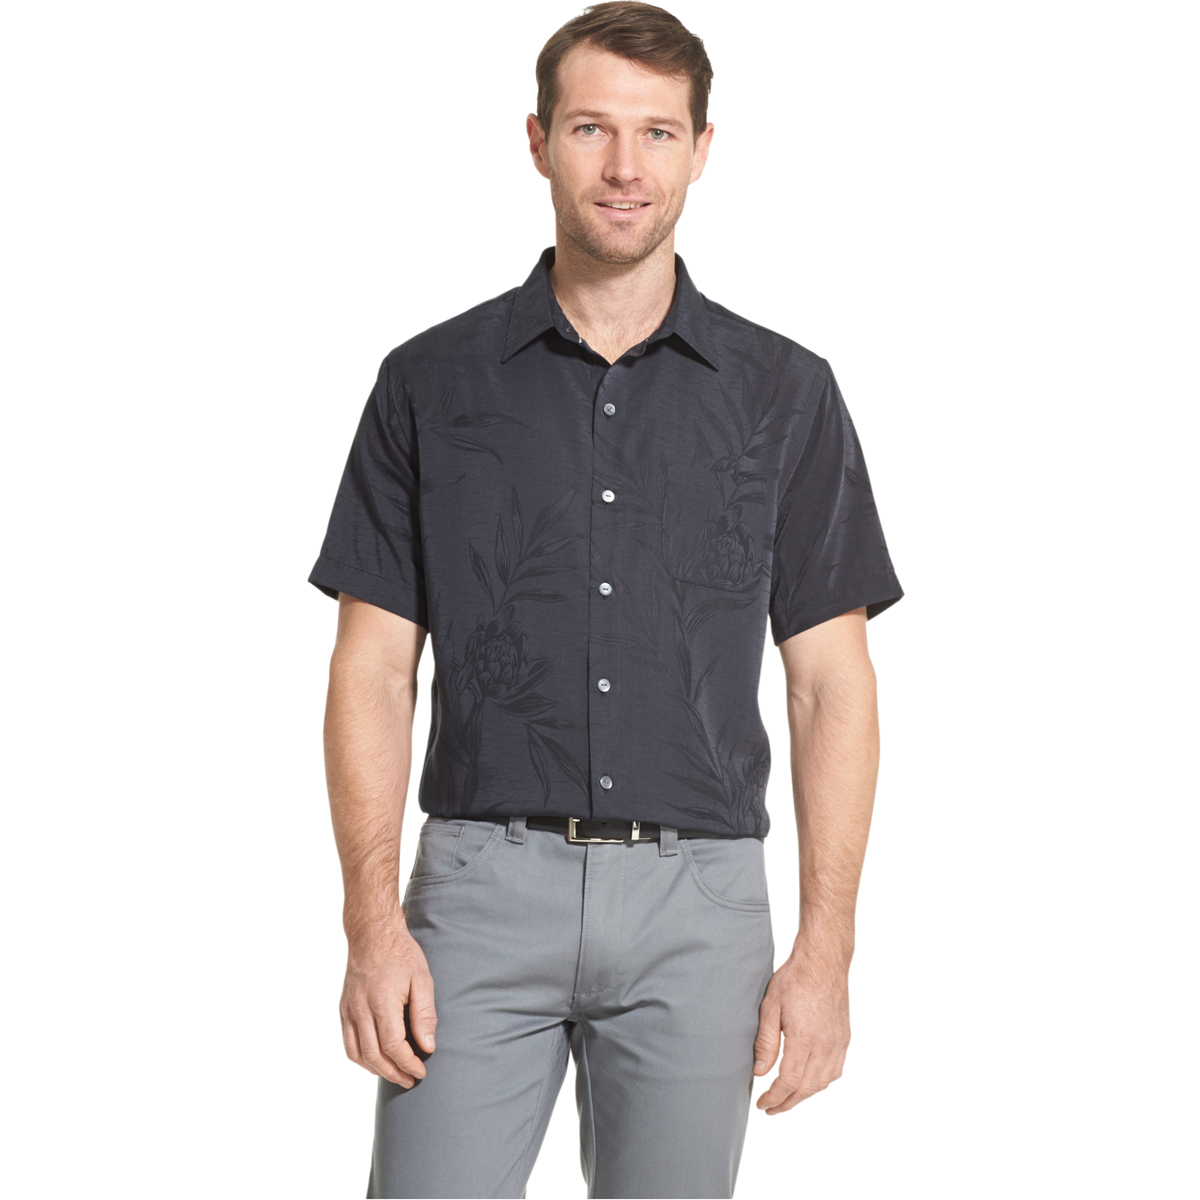 Van Heusen Men's Jaquard Short-Sleeve Shirt - Black, XXL